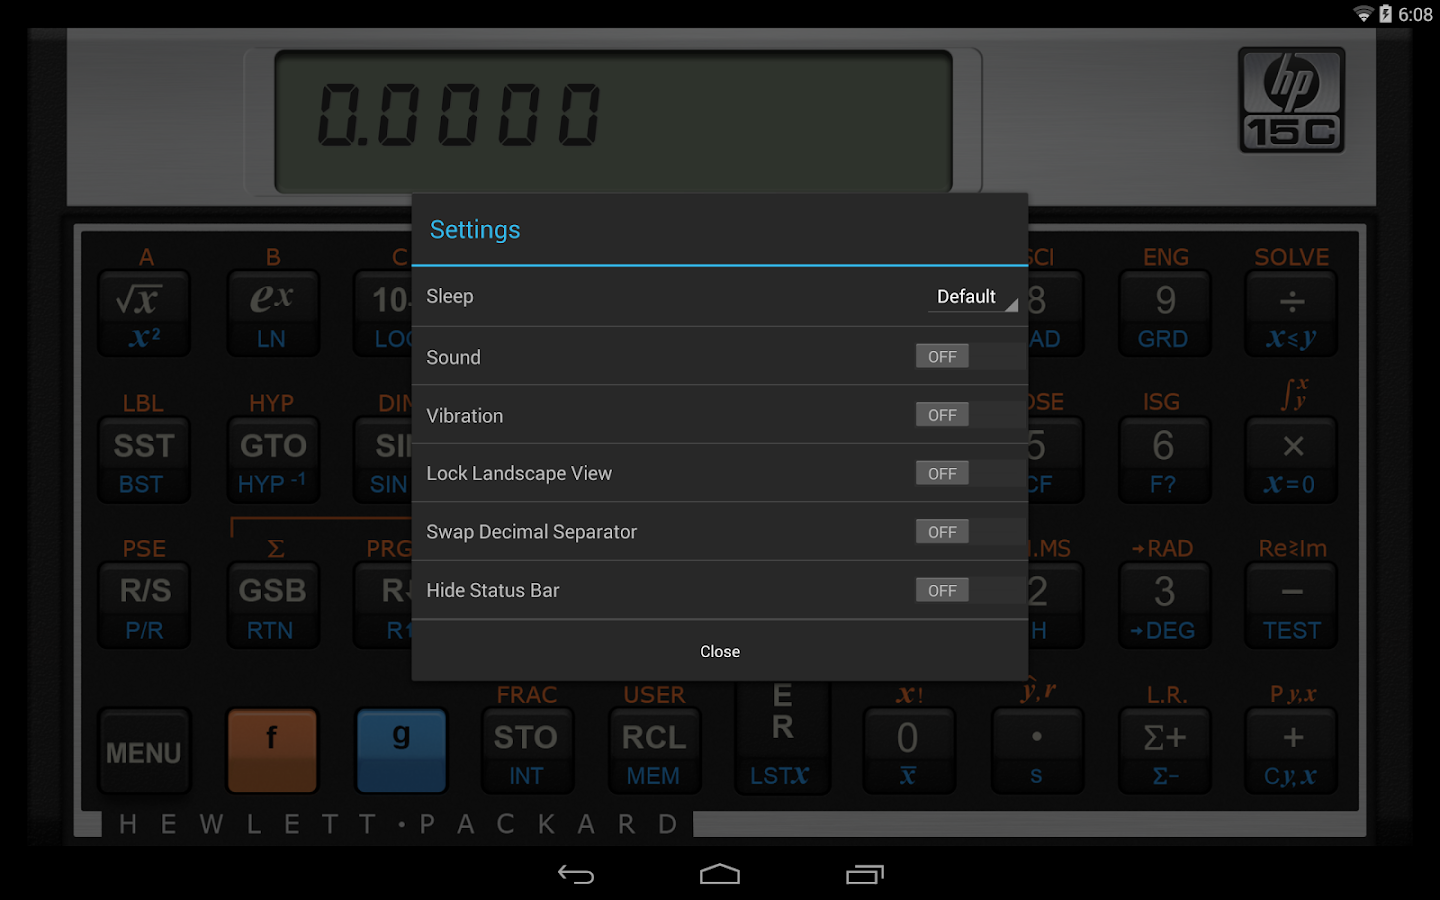 HP 15C Scientific Calculator 1.7.1 APK Download - Android ...